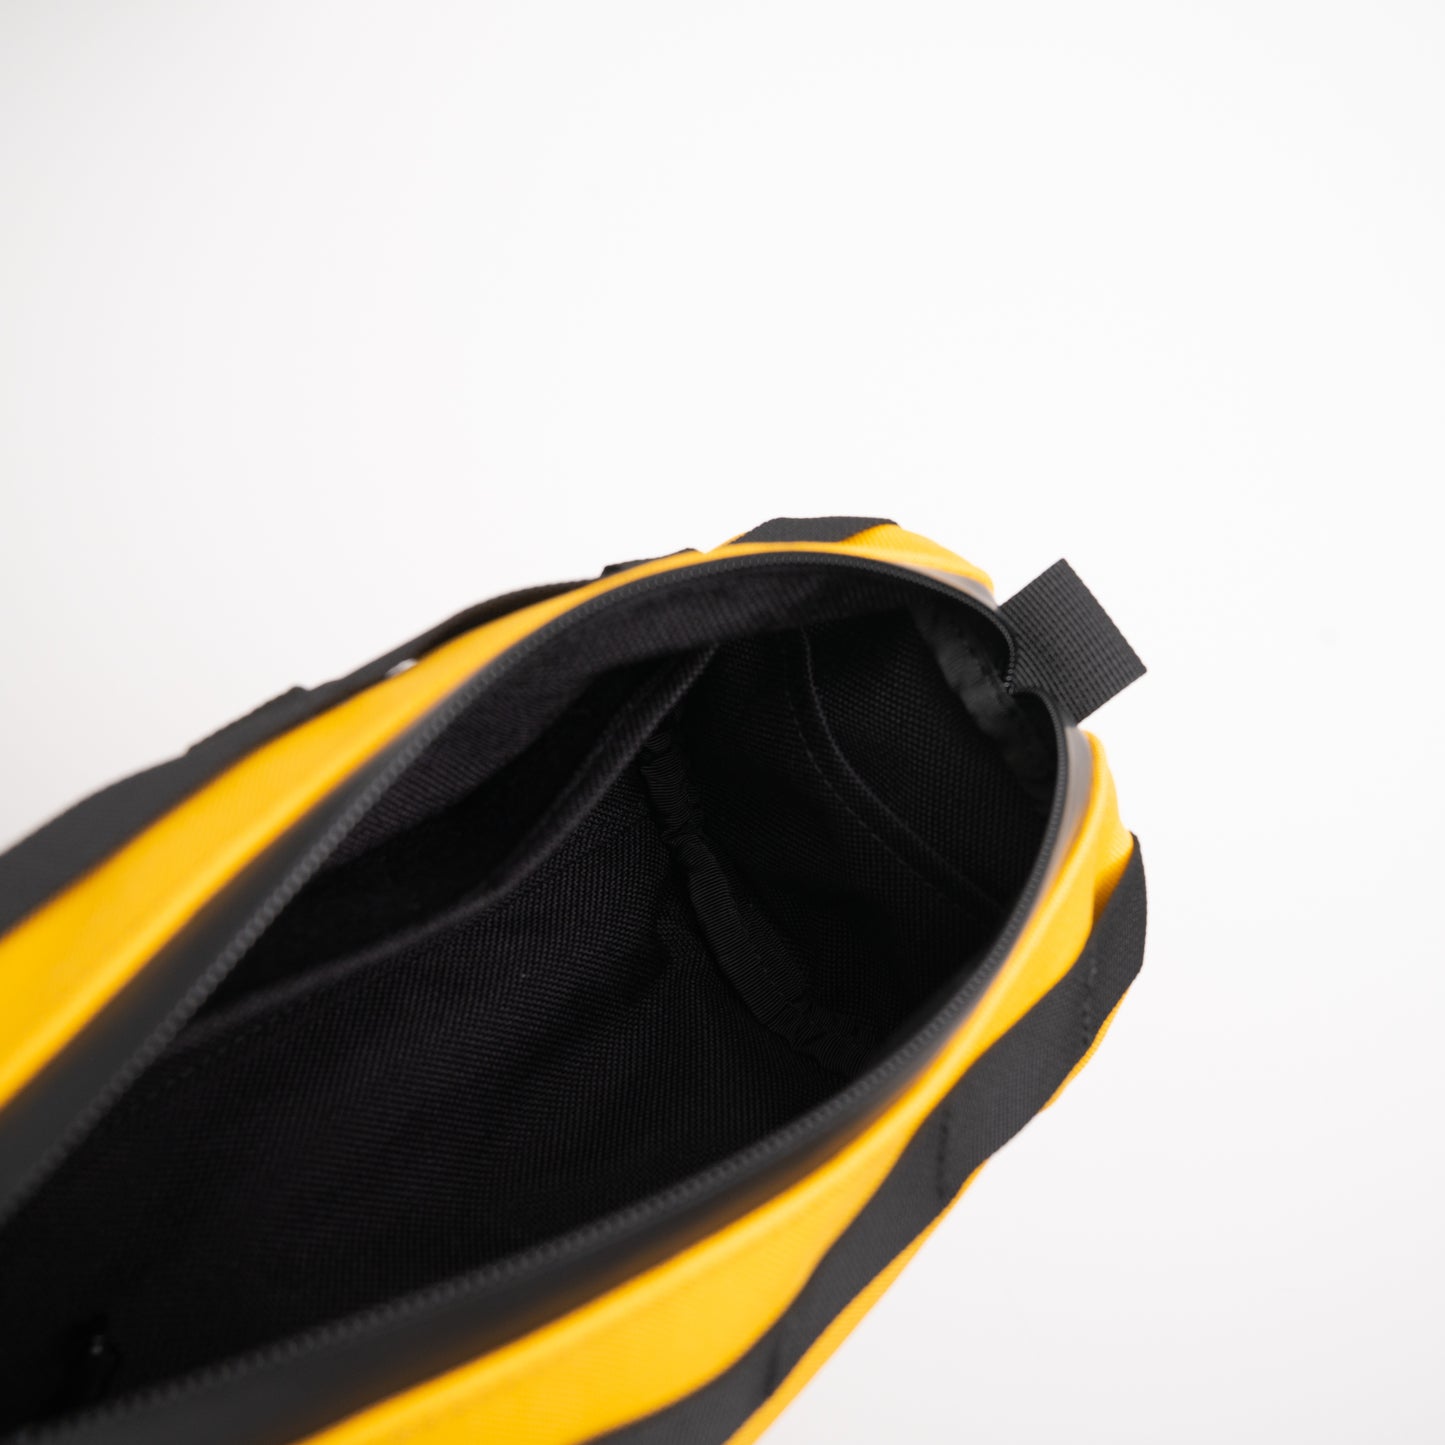 The Breakaway Bag - Yellow / Black